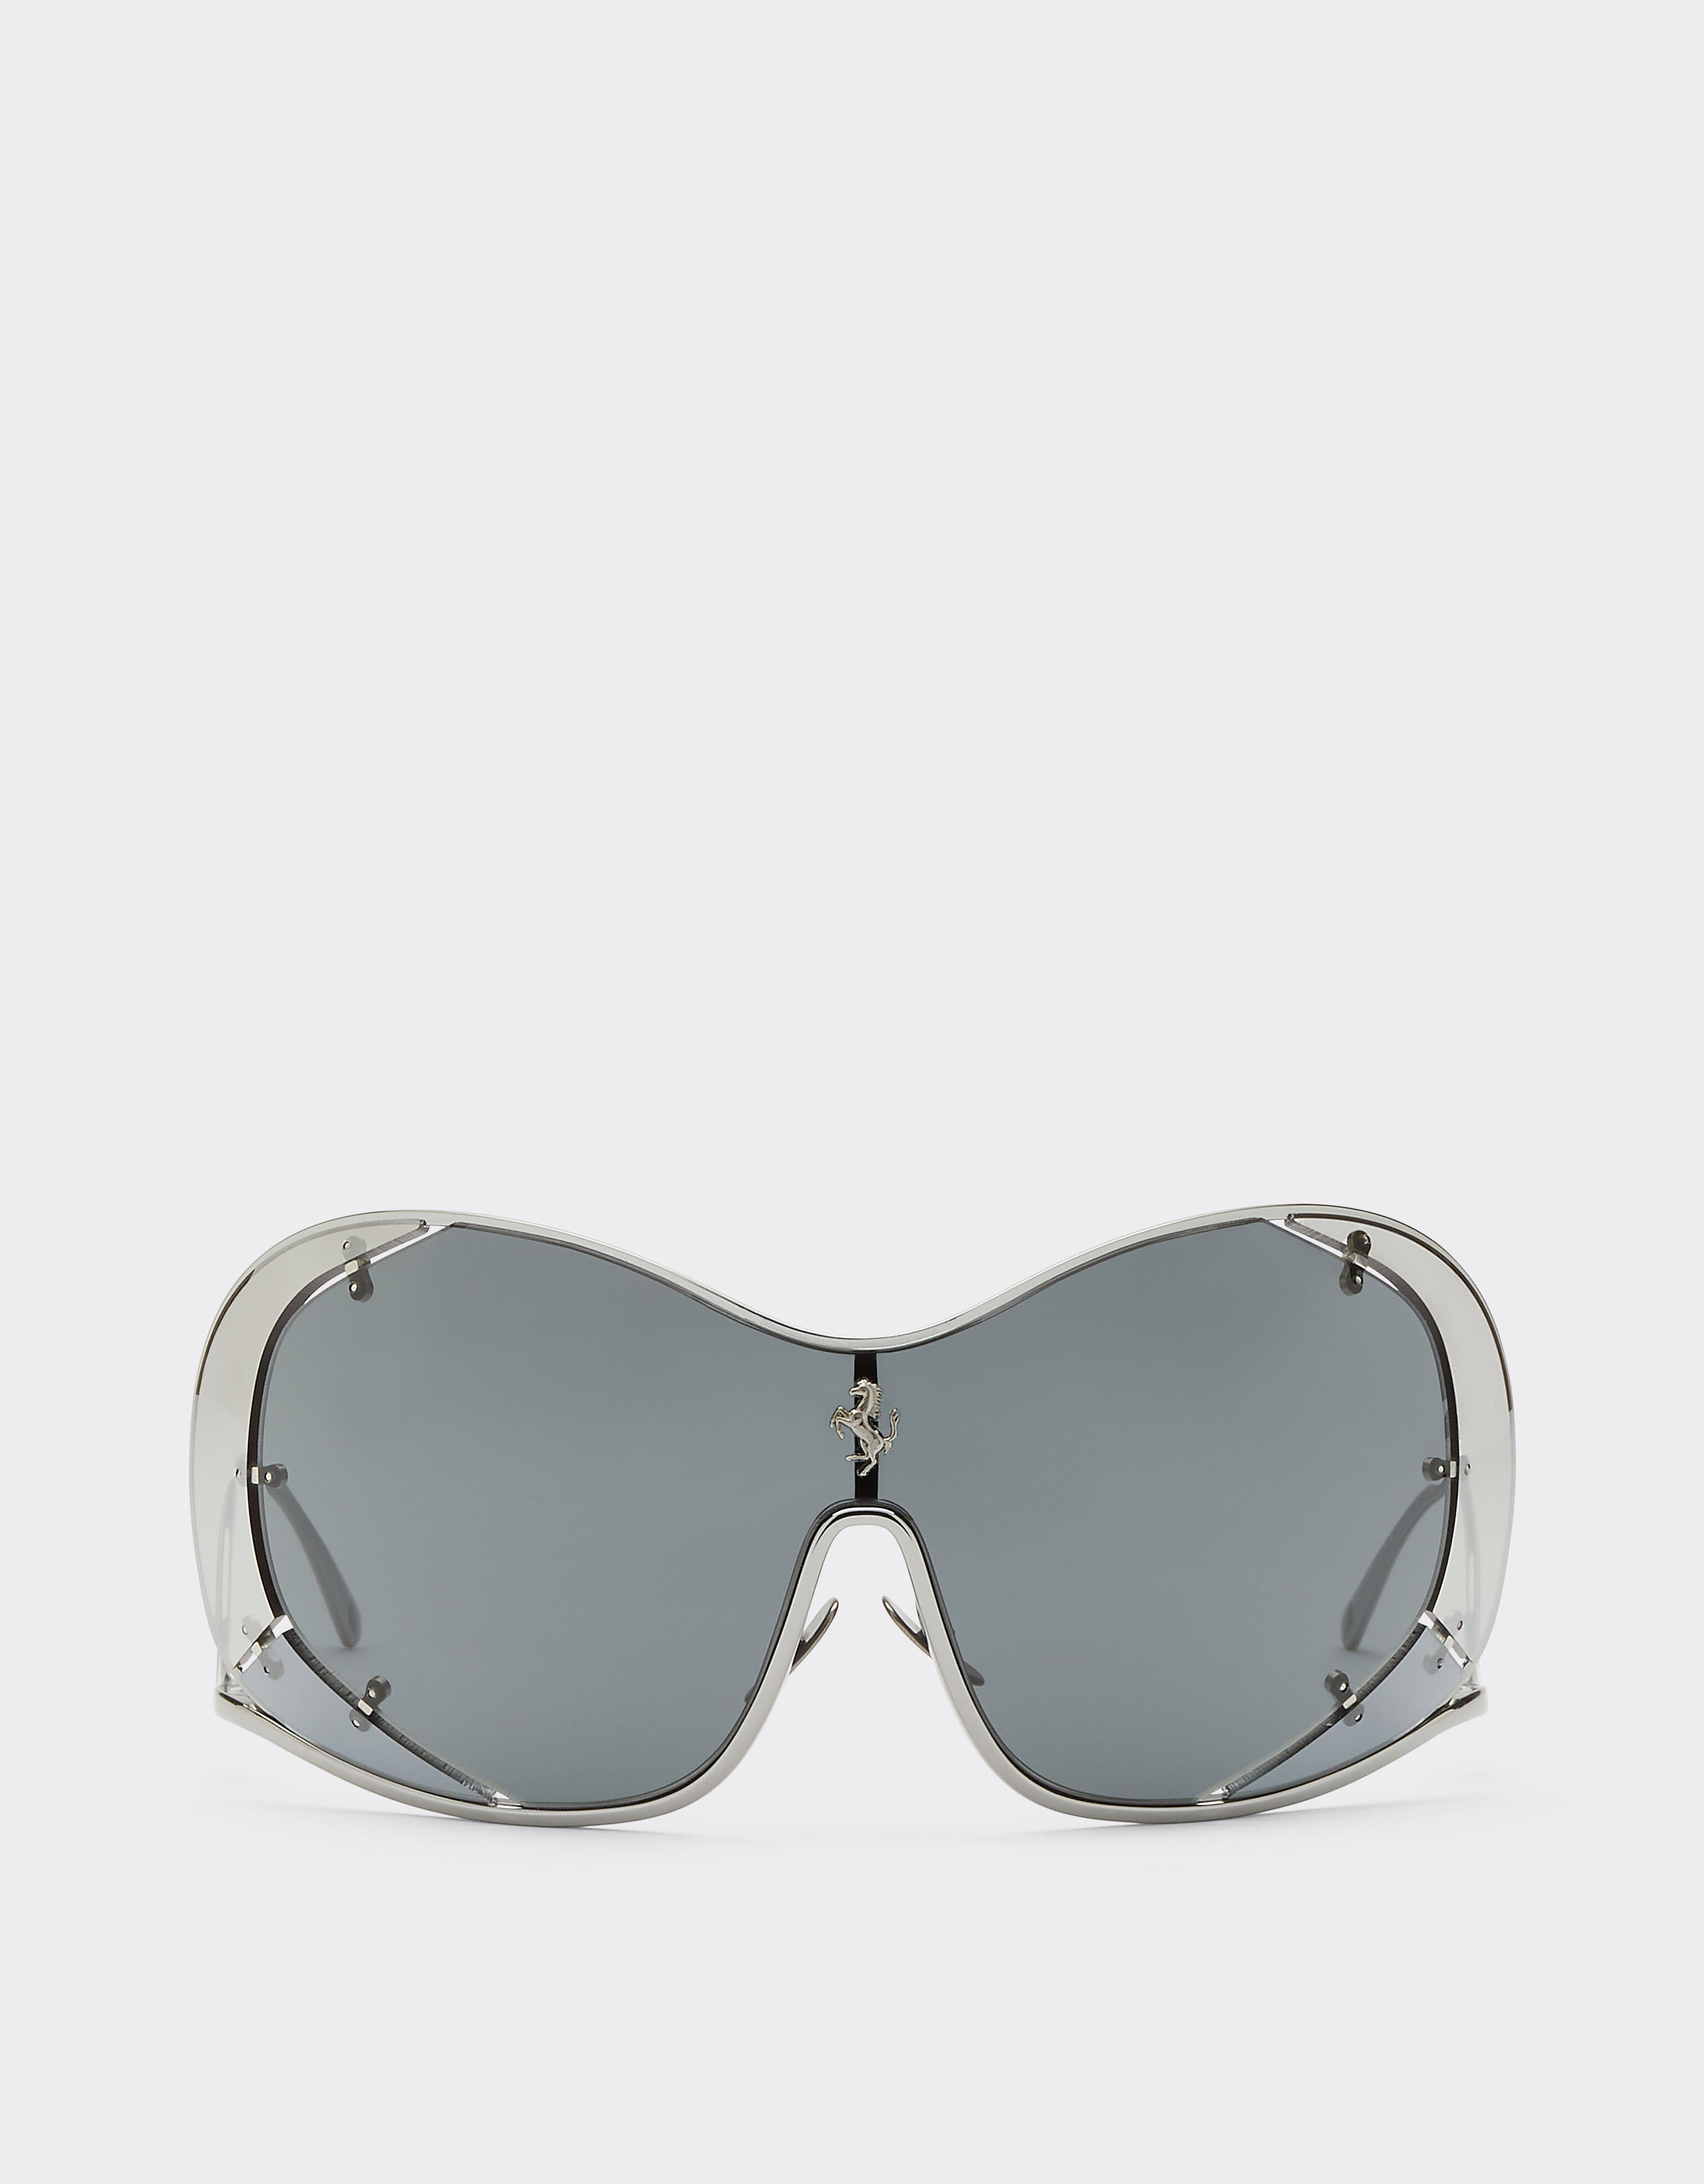 Ferrari Ferrari sunglasses with grey lenses Black Matt F1250f